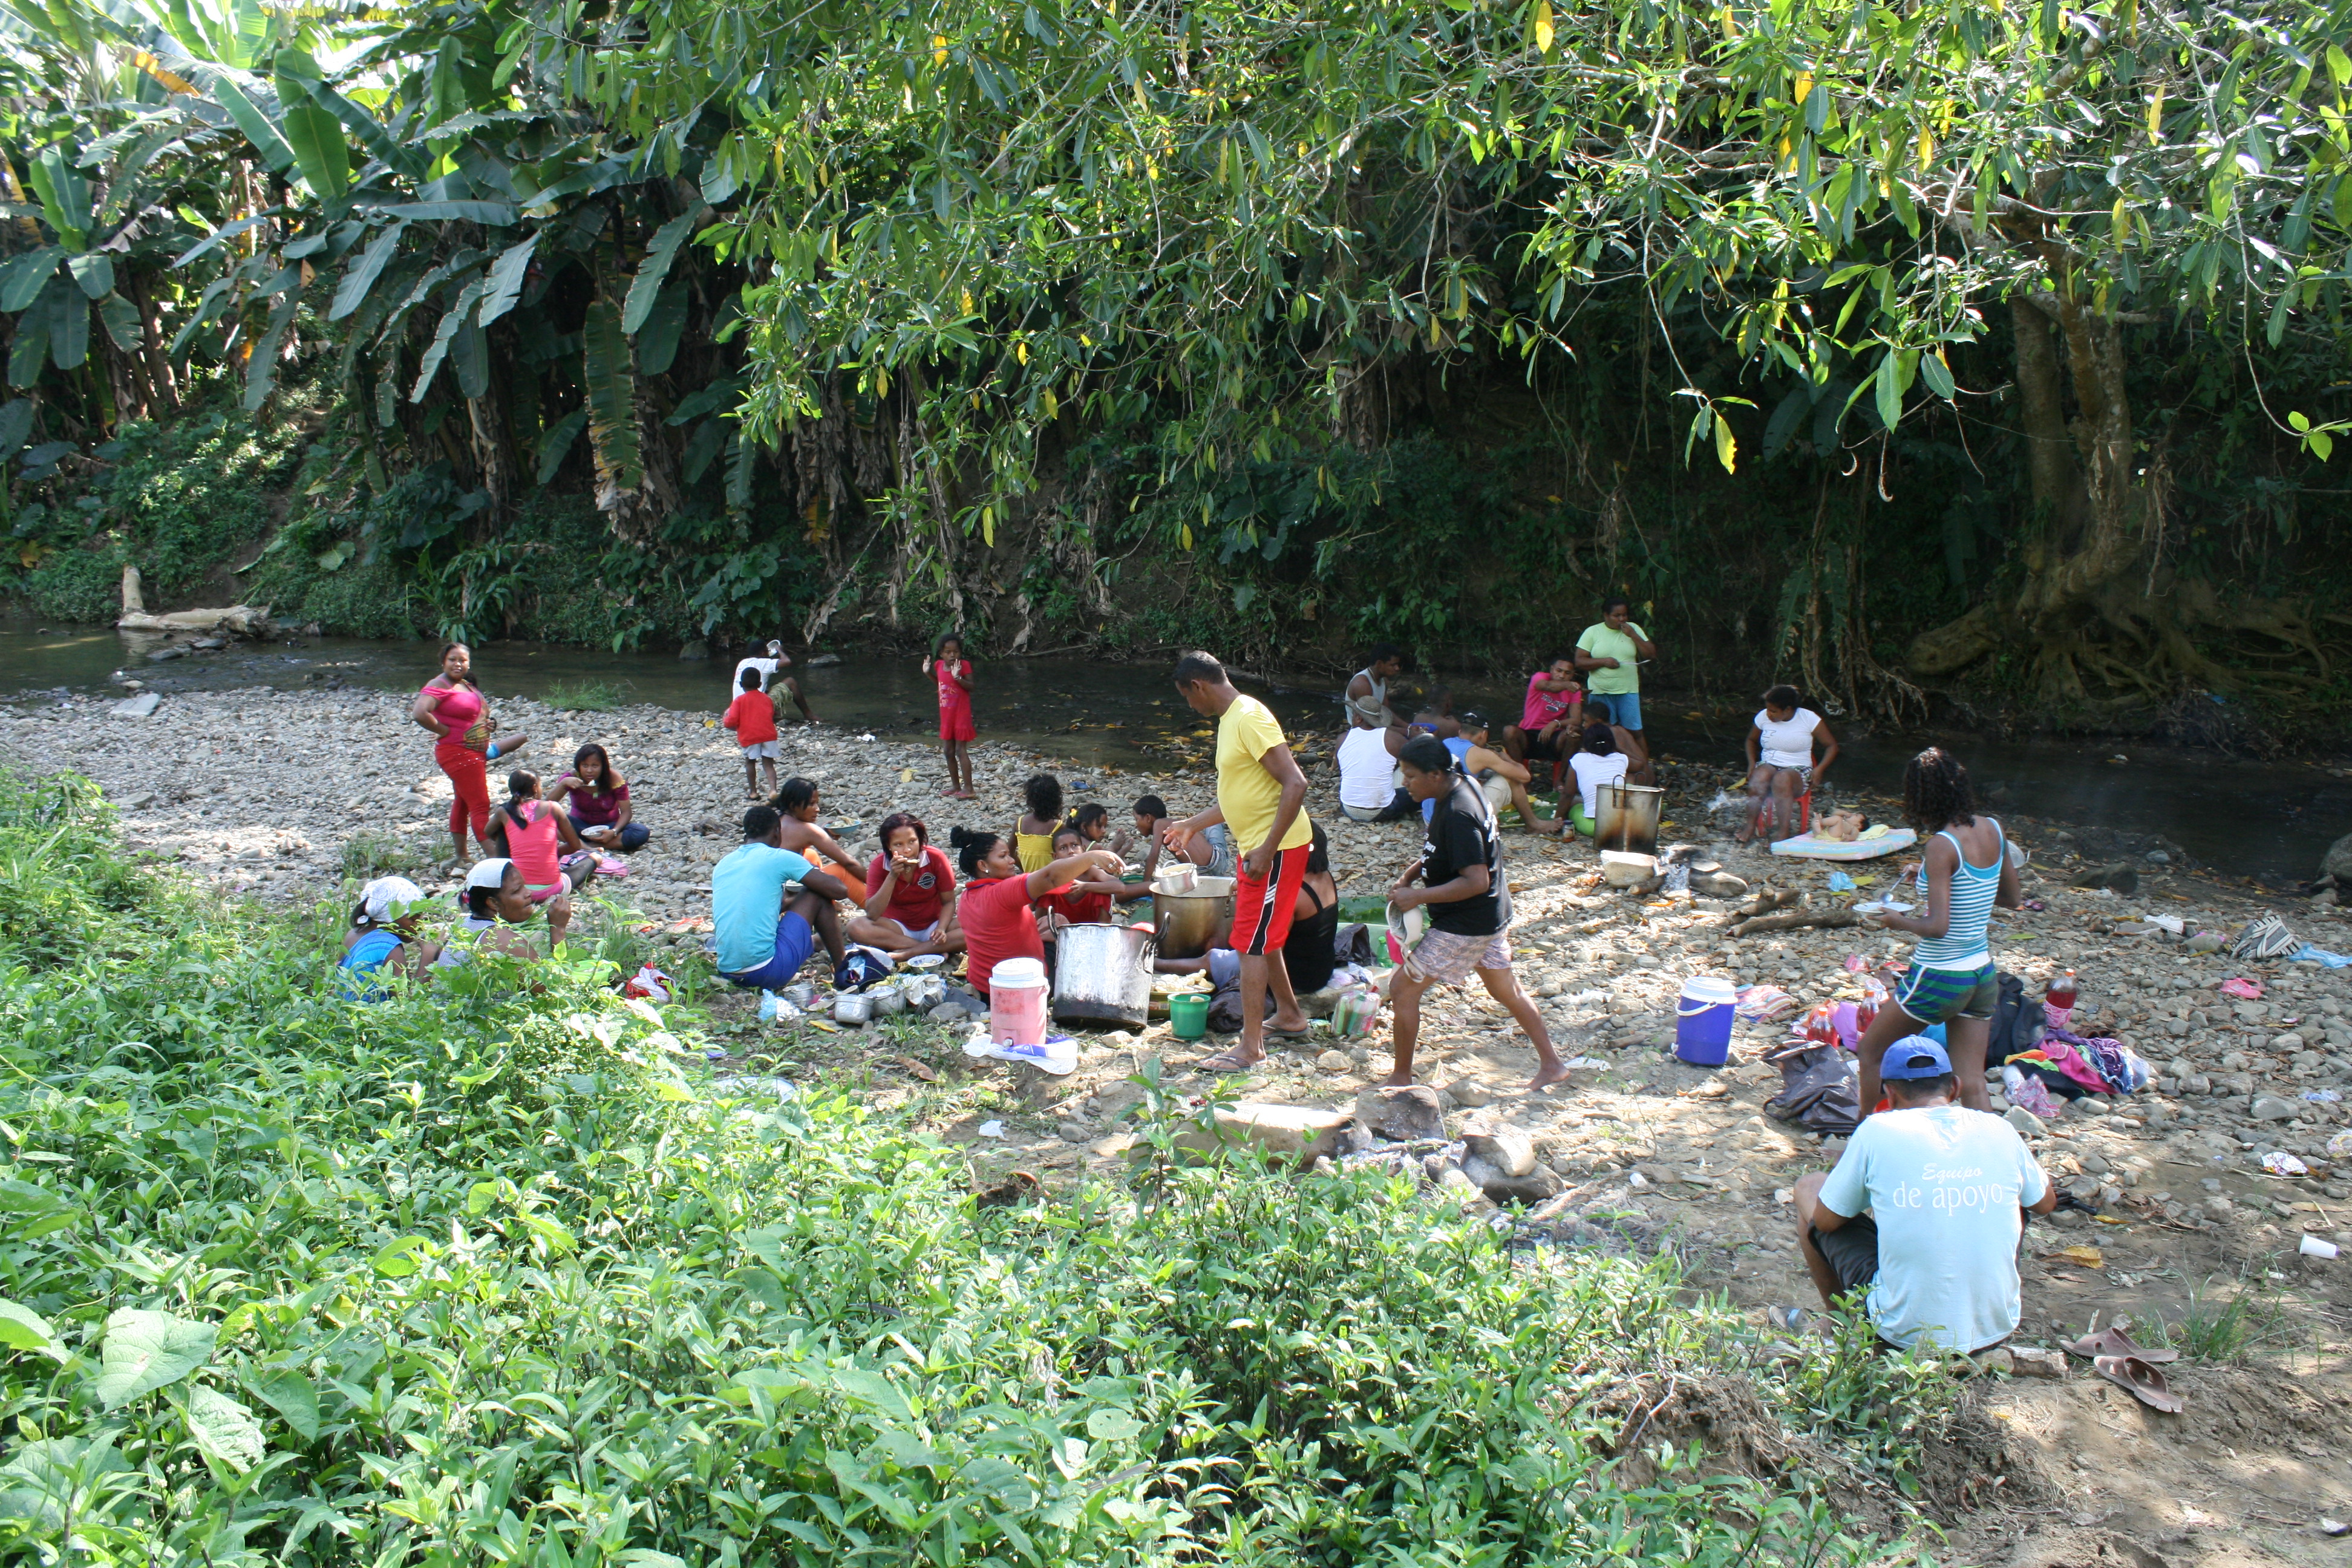 A community picnic on along a creek